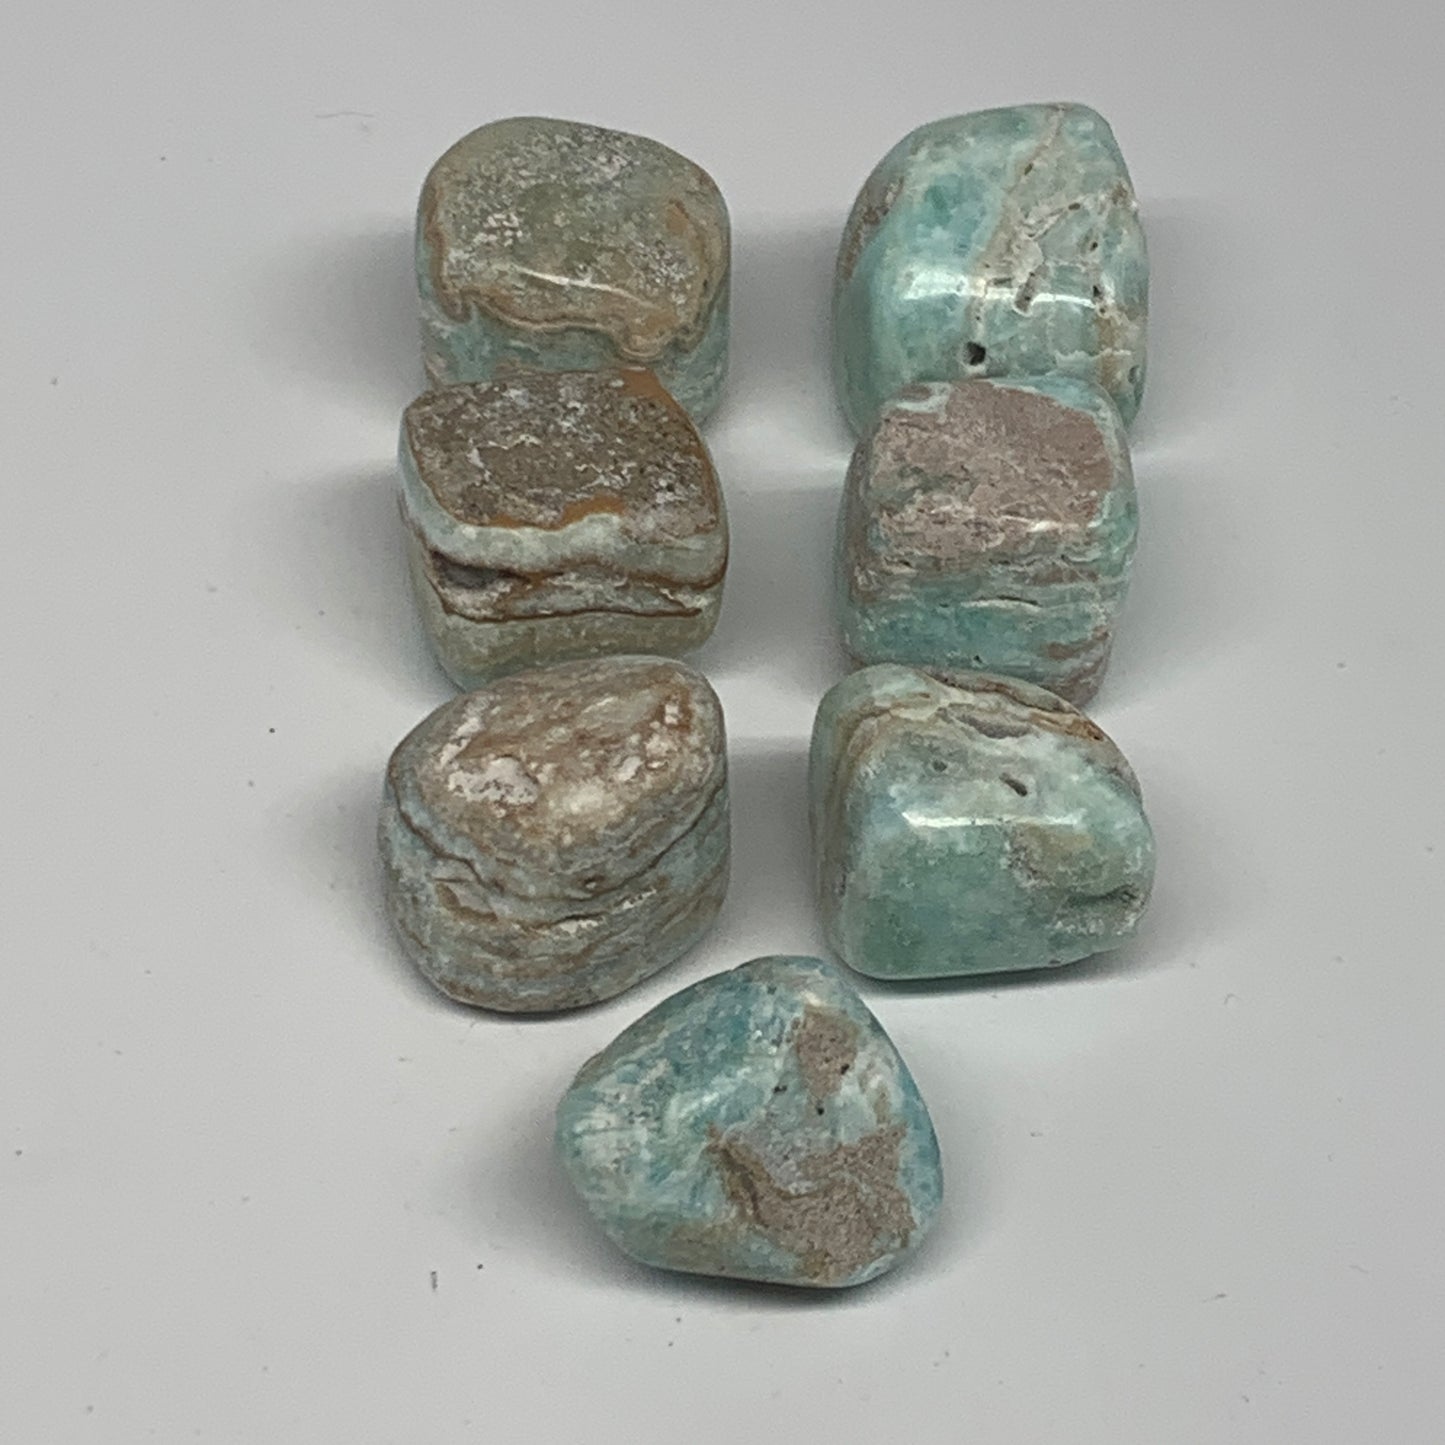 188.3g, 0.9"-1.1", 7pcs, Blue Aragonite Tumbled Stones @Afghanistan, B26671